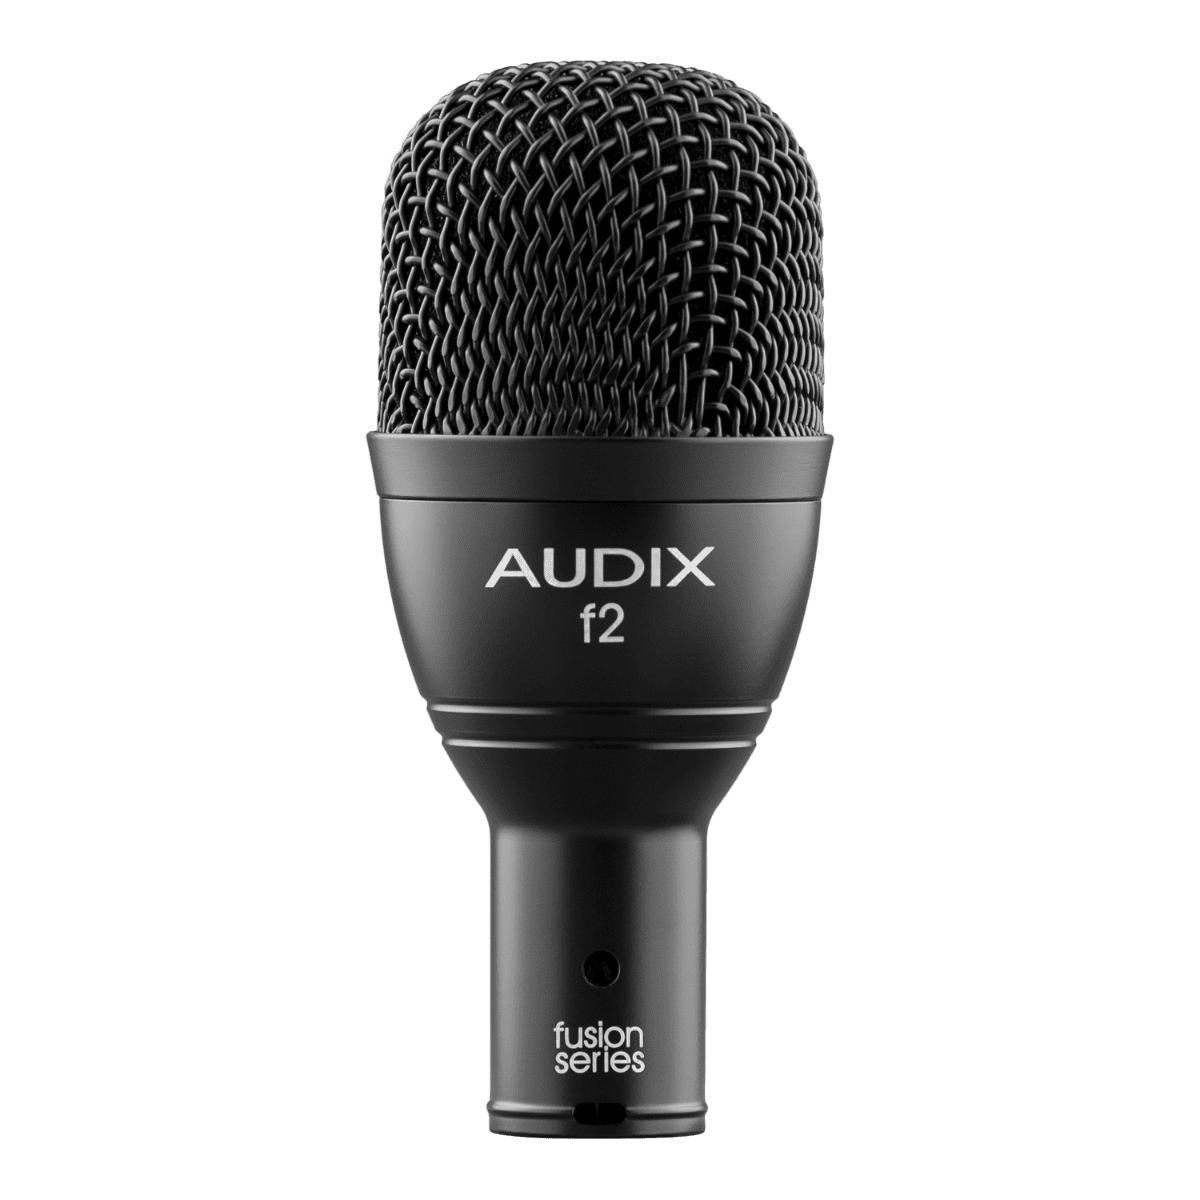 Audix f2 Microphone